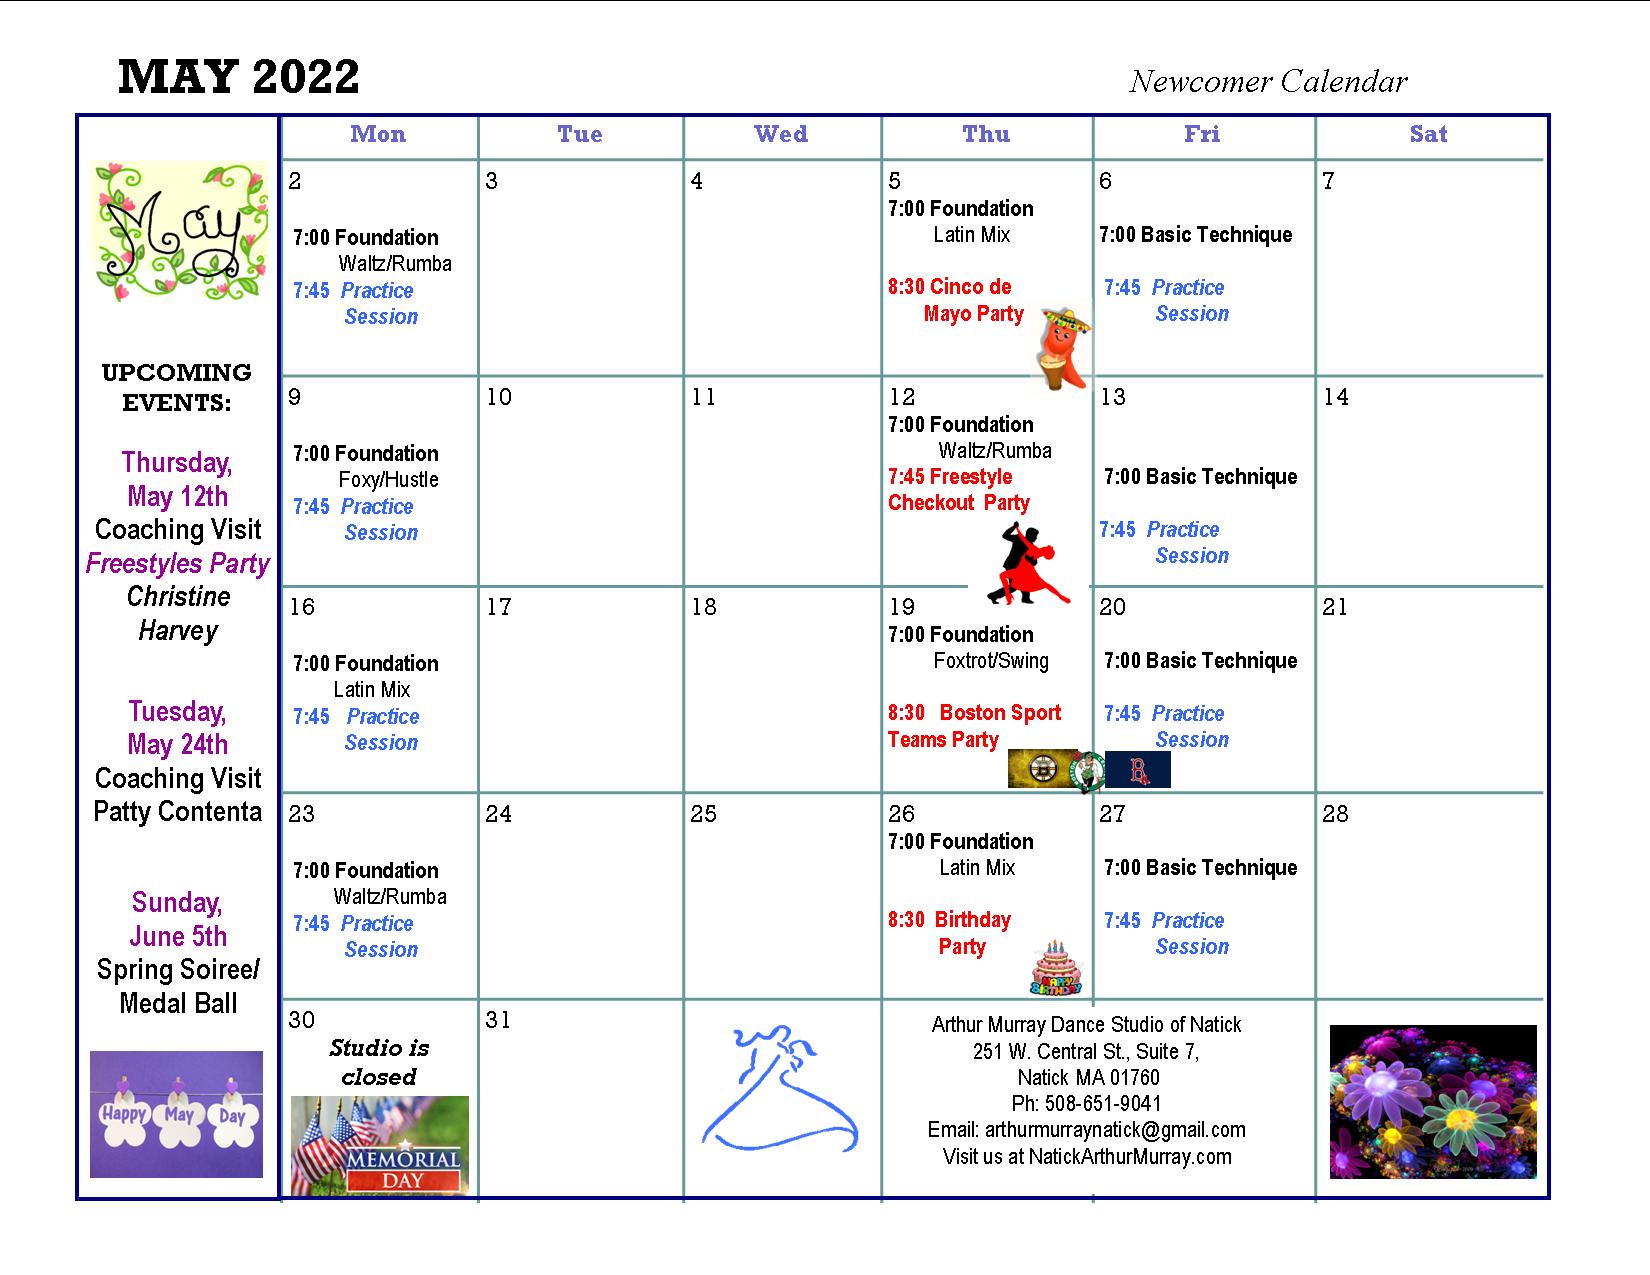 Dance Studio Natick Newcomer May Calendar